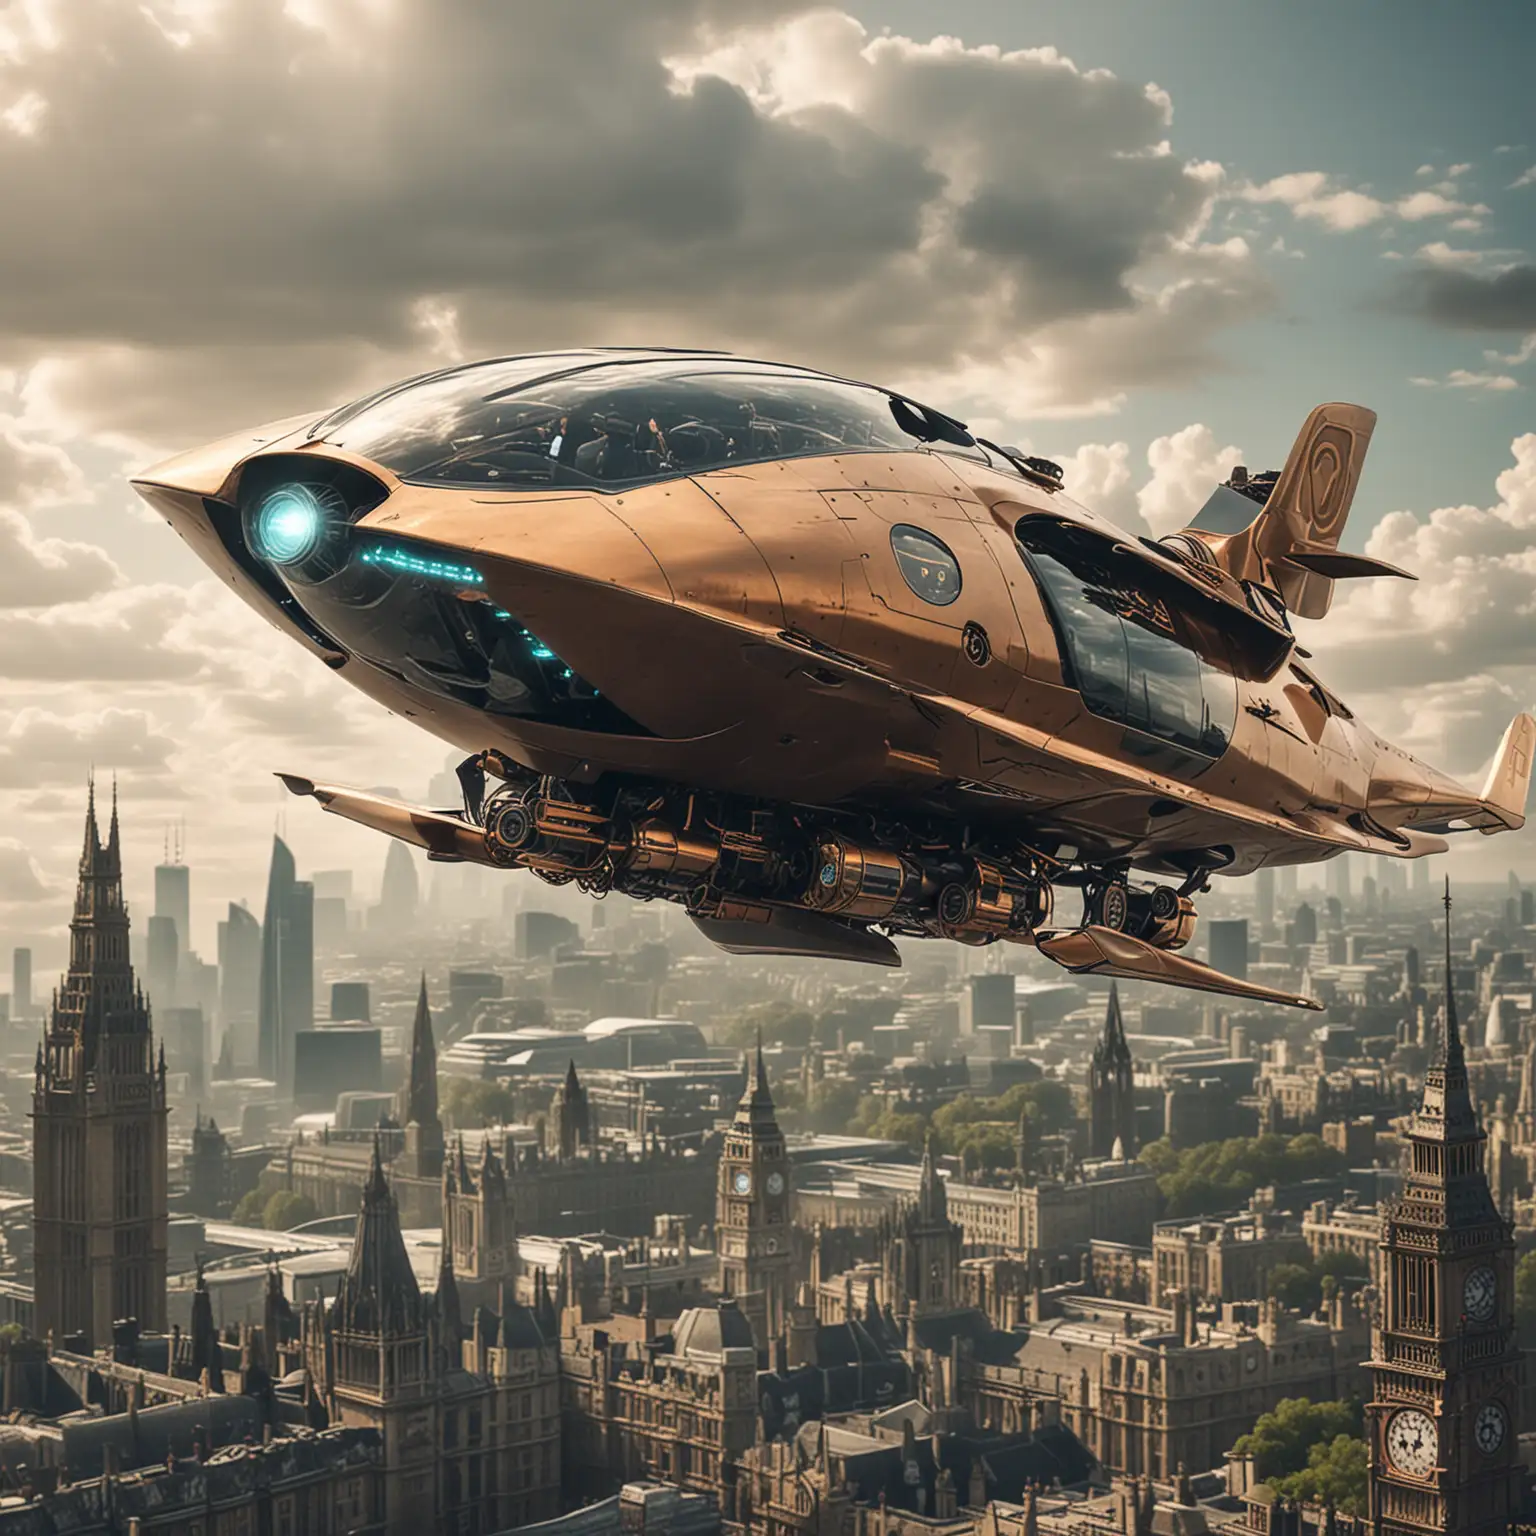 Futuristic Steampunk Air Car Flying Over London Skyline